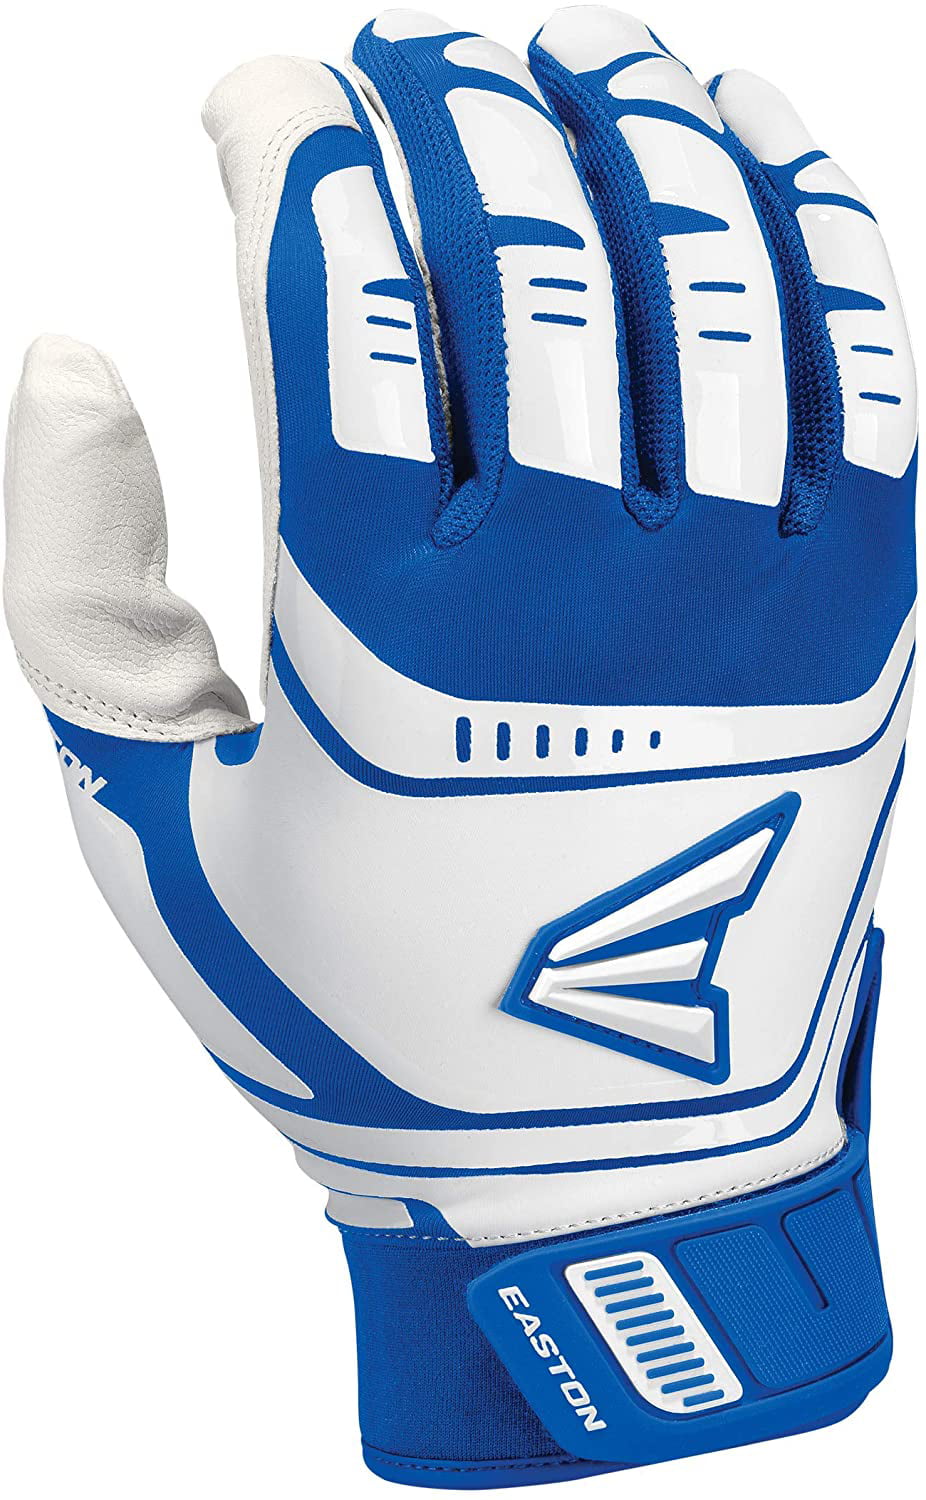 Easton Gametime Batting Gloves White and Royal Blue Adult Sizes S M L 